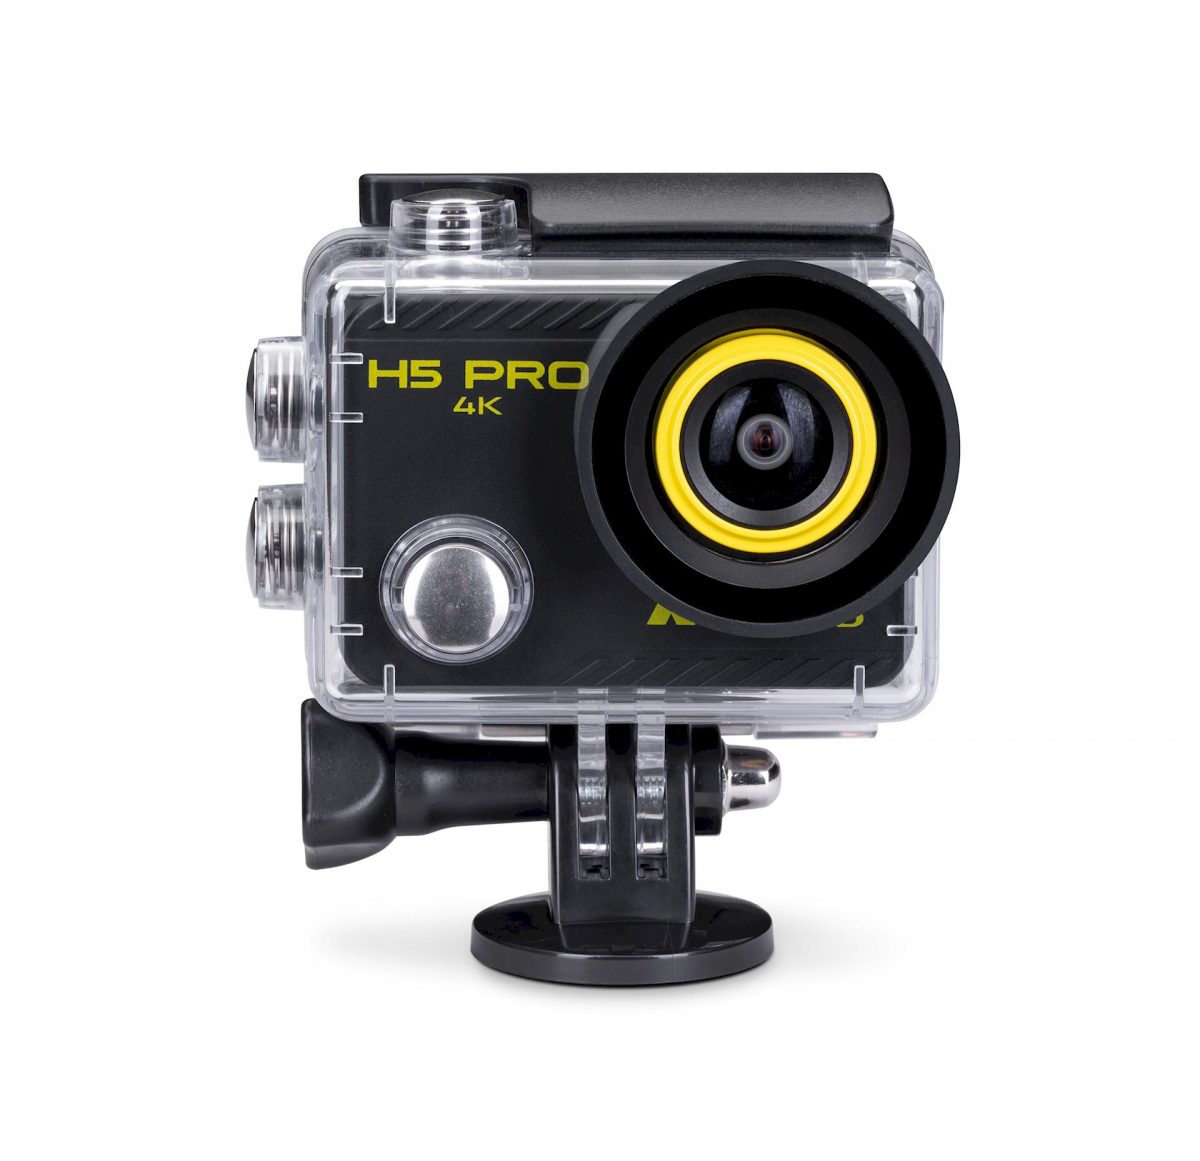 Midland action camera H5 PRO